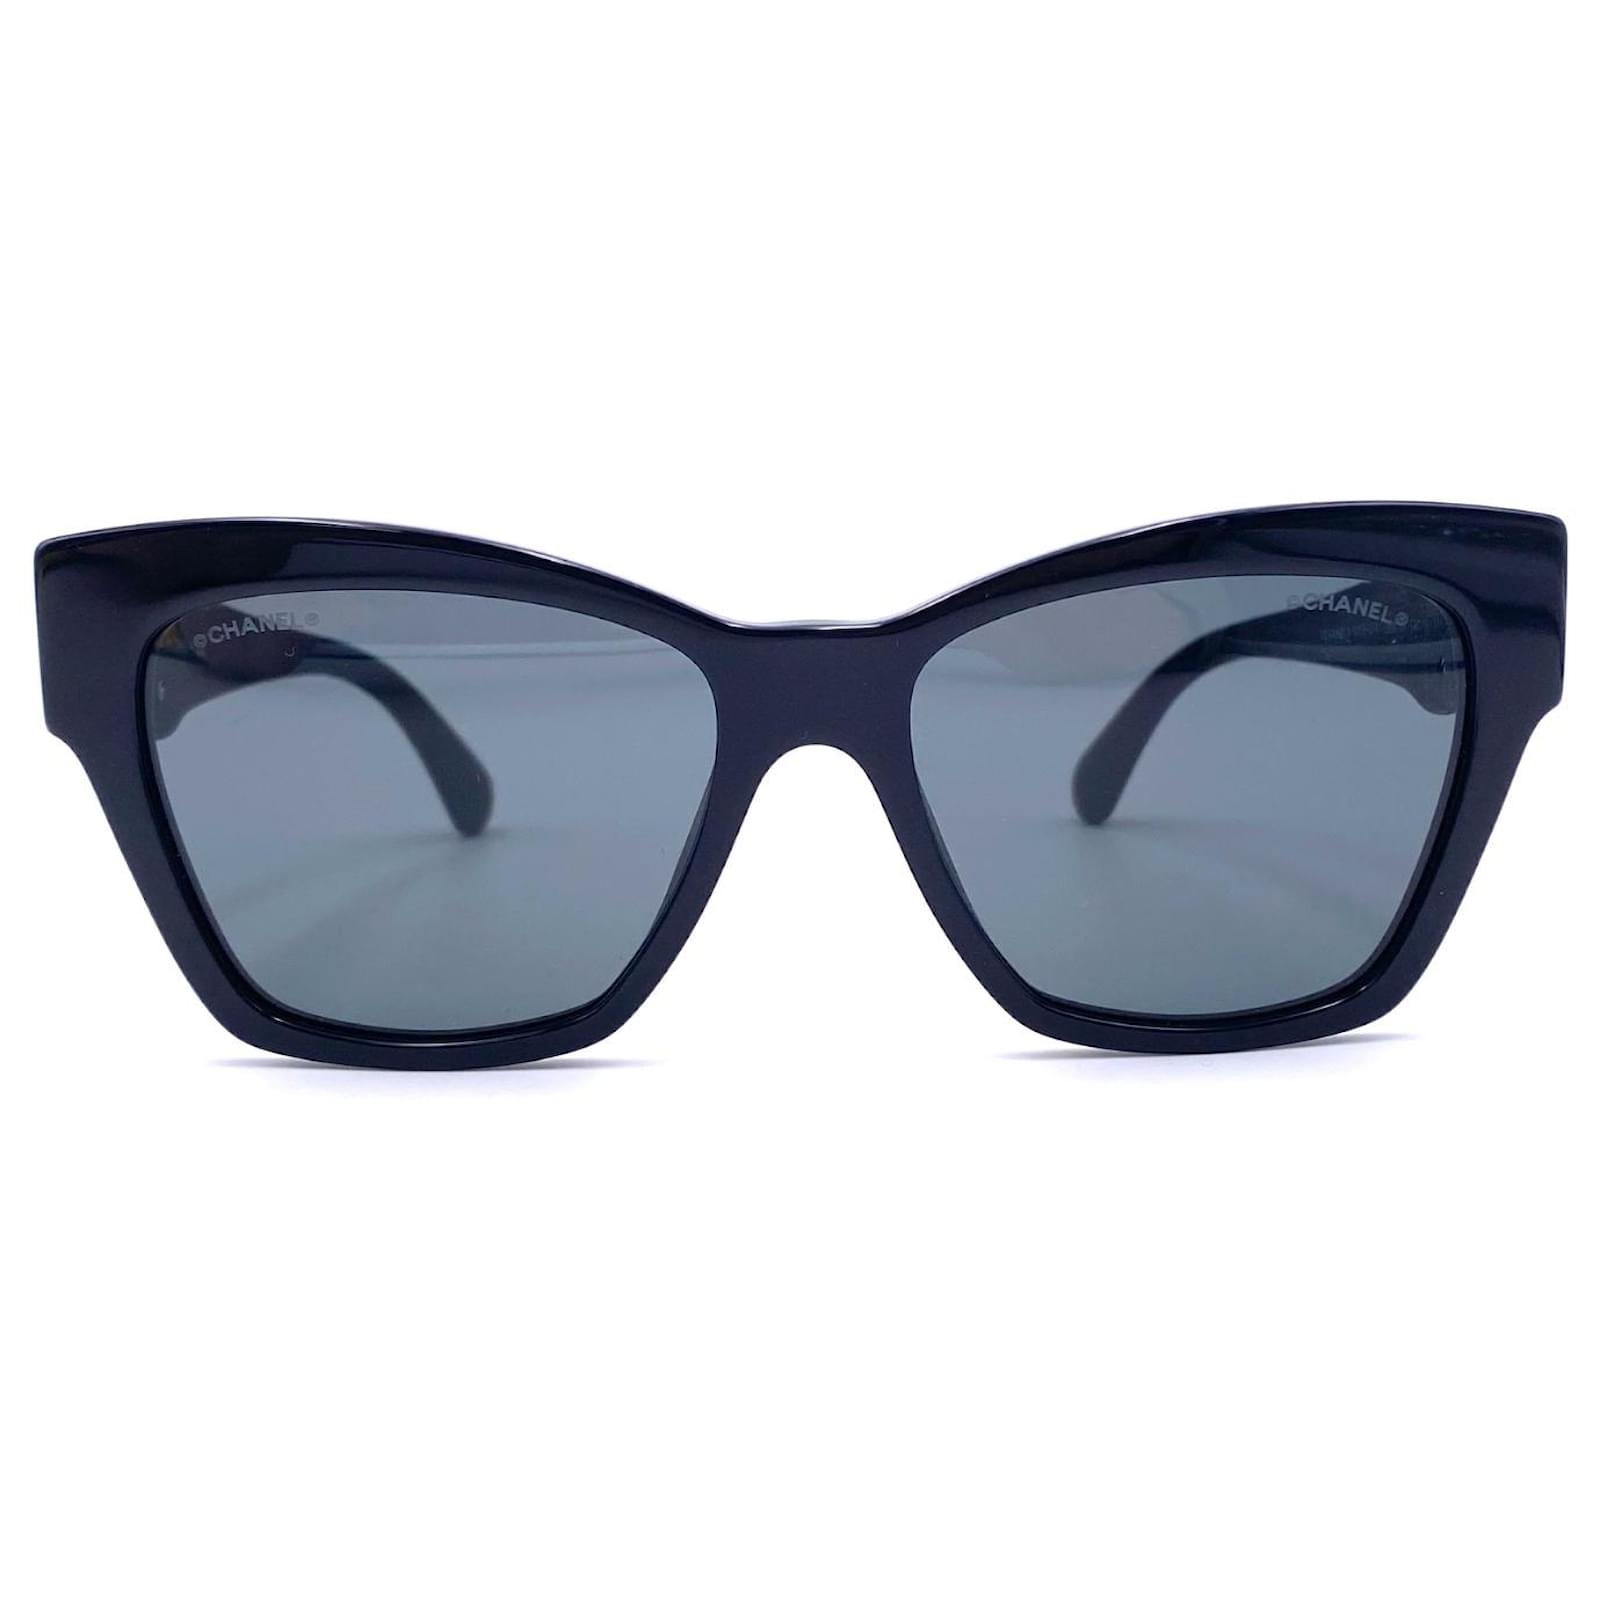 Preowned Chanel Black Cat Eye Sunglasses  ModeSens  Black cat eye  sunglasses Cat eye sunglasses Chanel sunglasses black